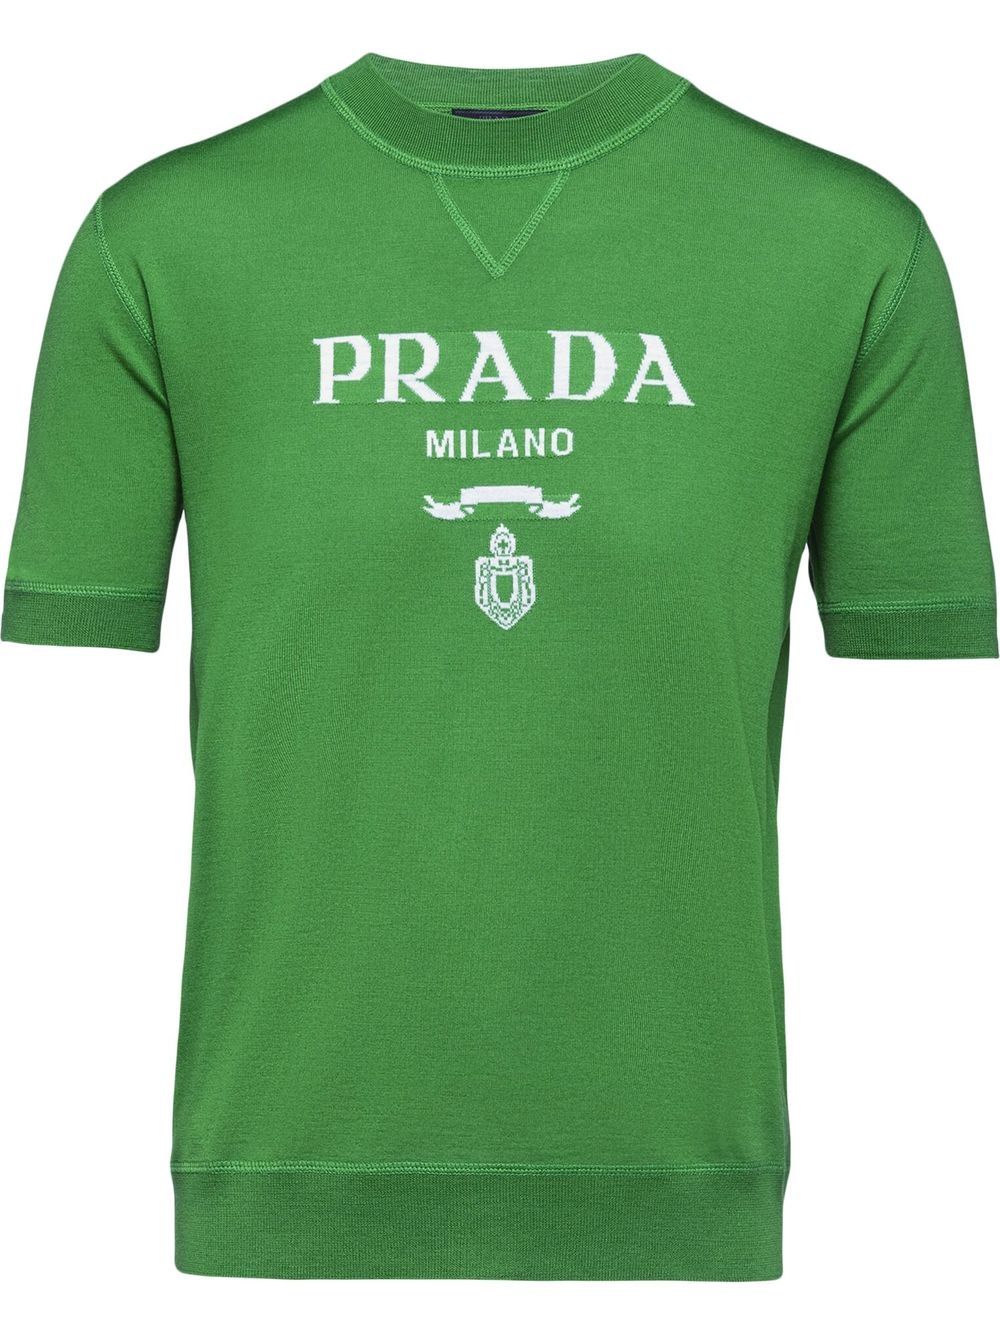 PRADA MILANO DAL 1913 - Prada S.a. Trademark Registration